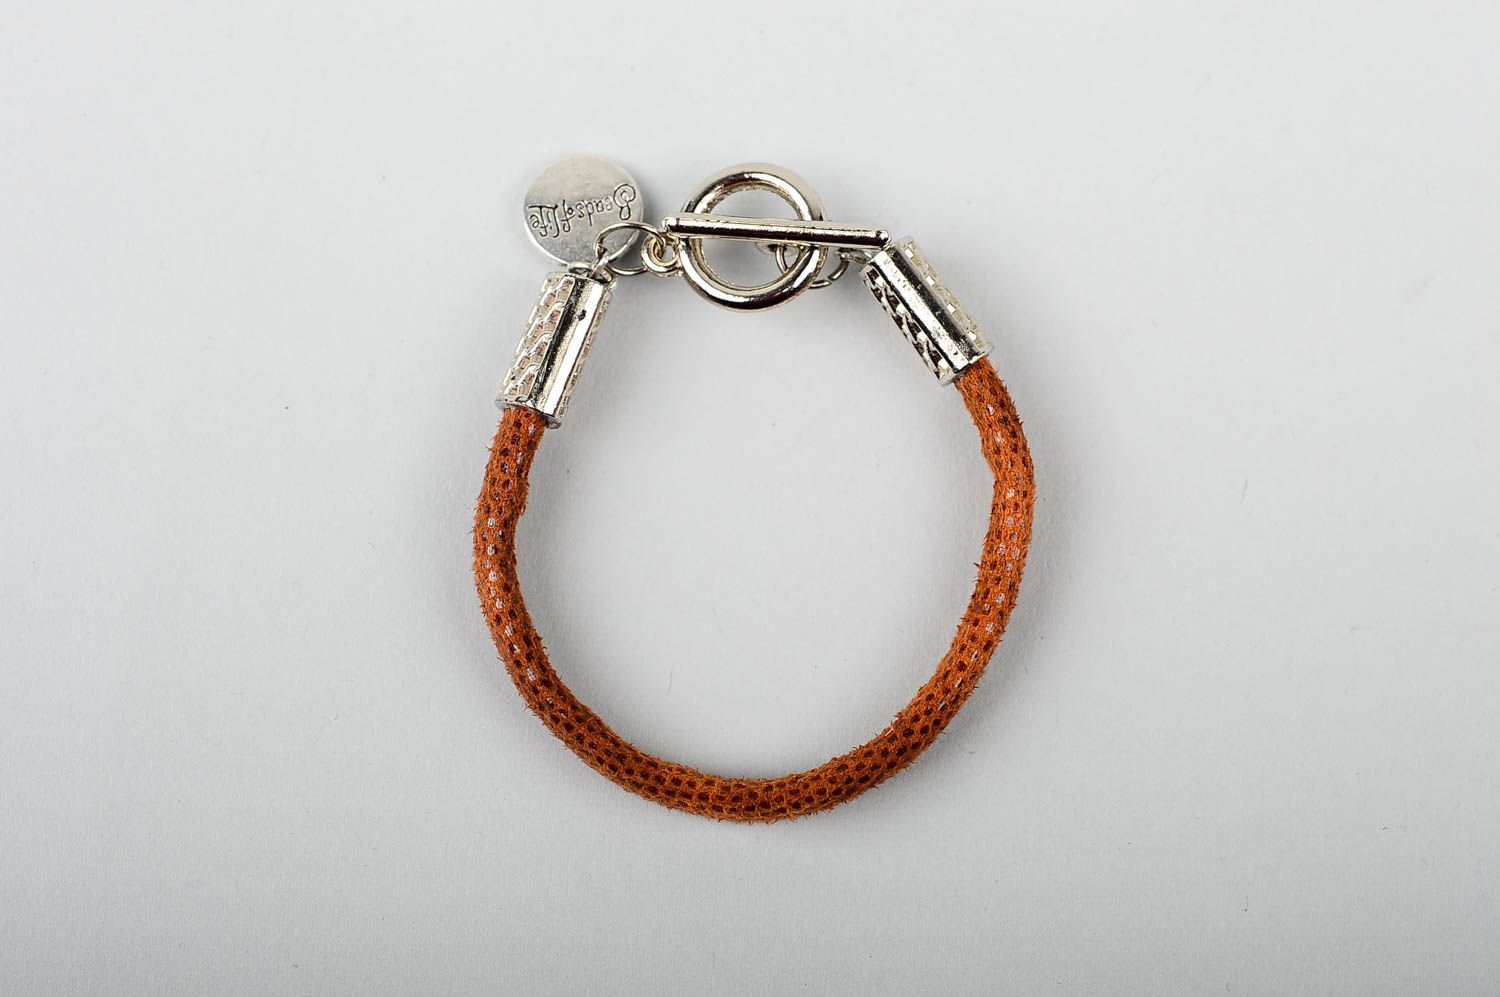 Womens handmade leather bracelet wrist bracelet designs leather goods gift ideas photo 1